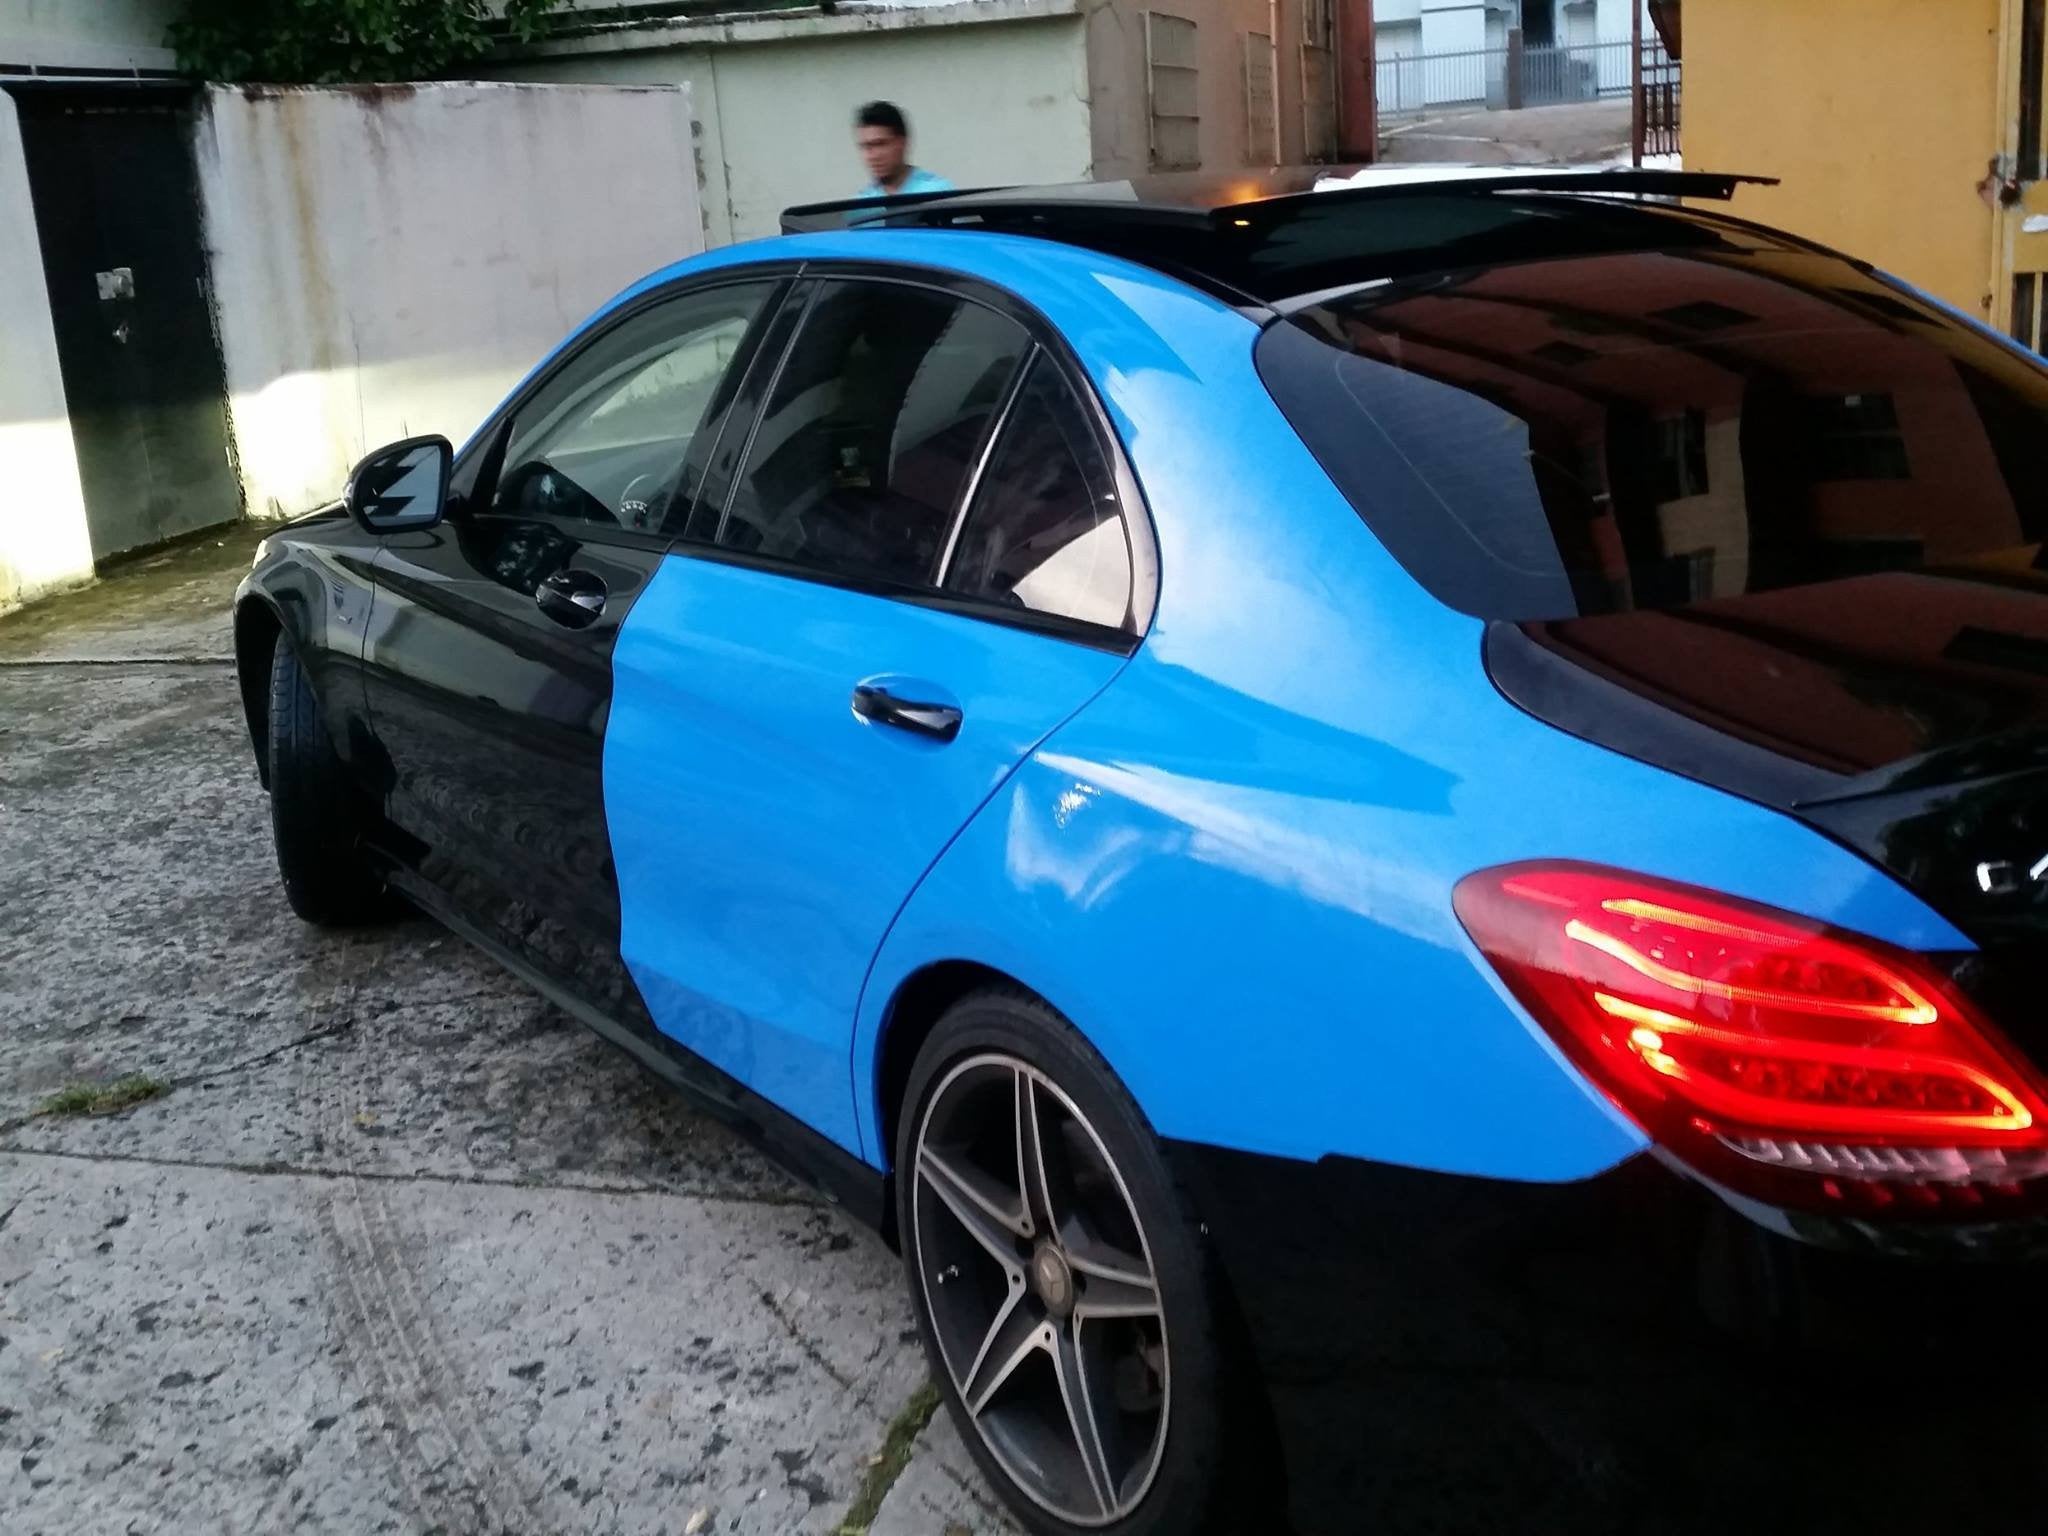 VViViD+Gloss Smurf Blue (Riviera PorscheGT3 Blue) AKA Laguna Seca 